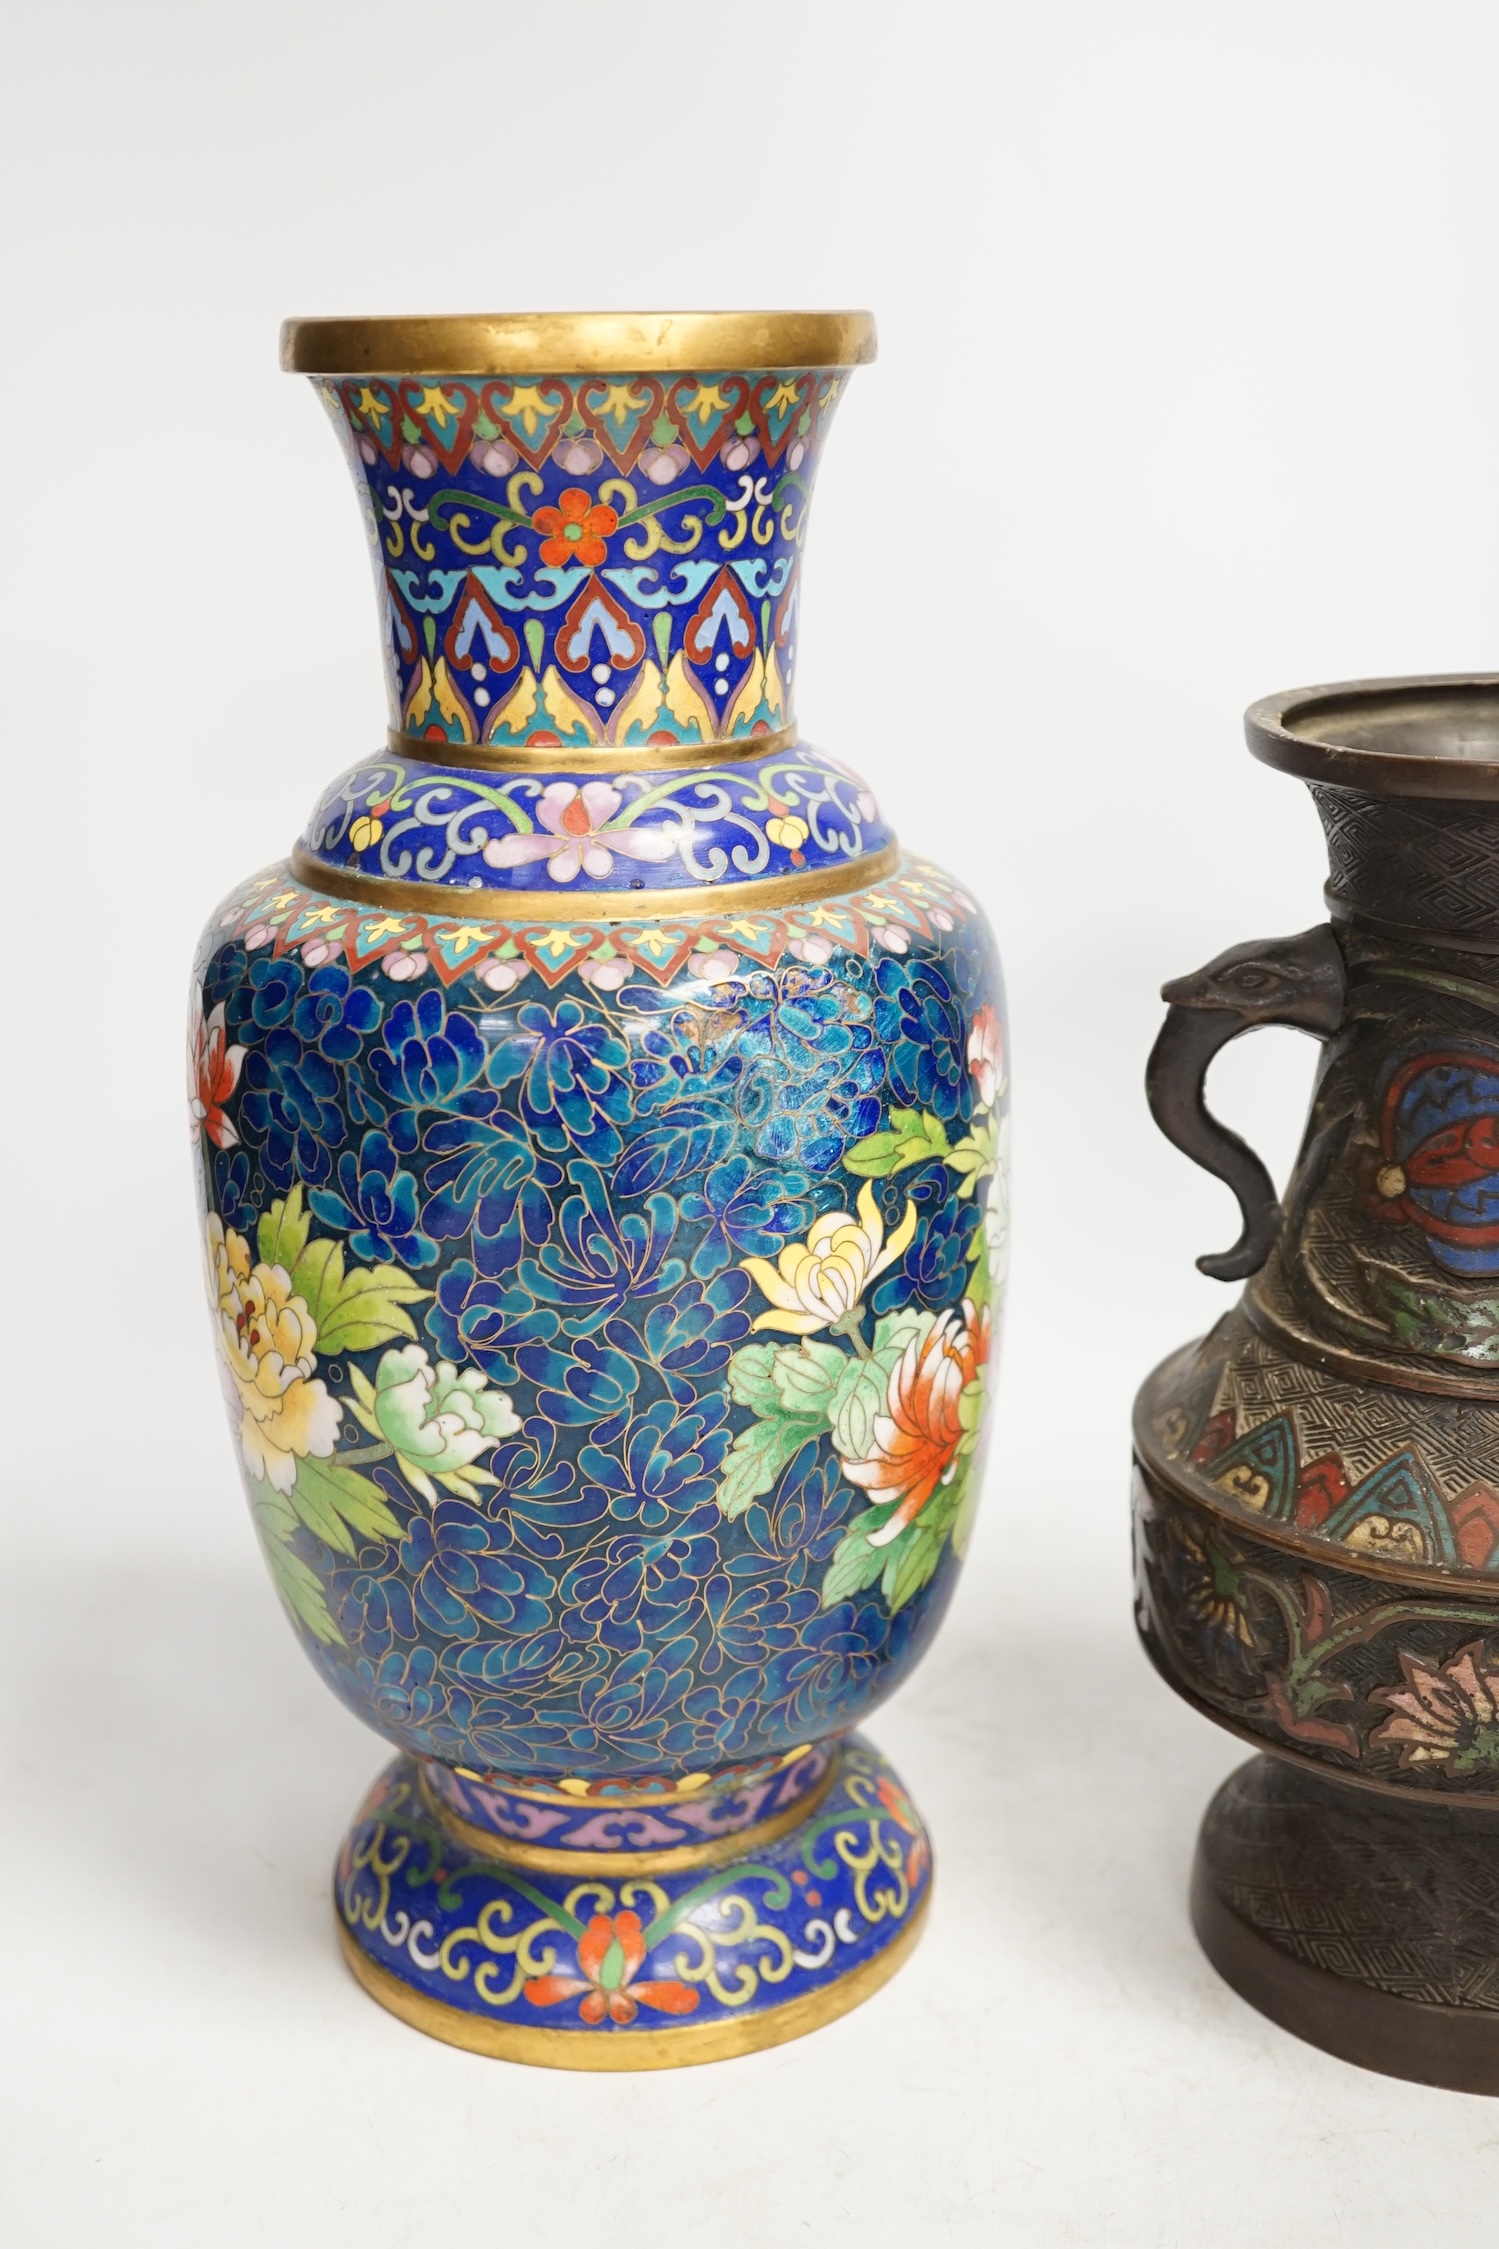 A Japanese bronze and champlevé enamel vase and a Chinese cloisonné enamel vase, Champlevé vase 24cm high. Condition - cloisonné vase dented, champlevé vase in good condition